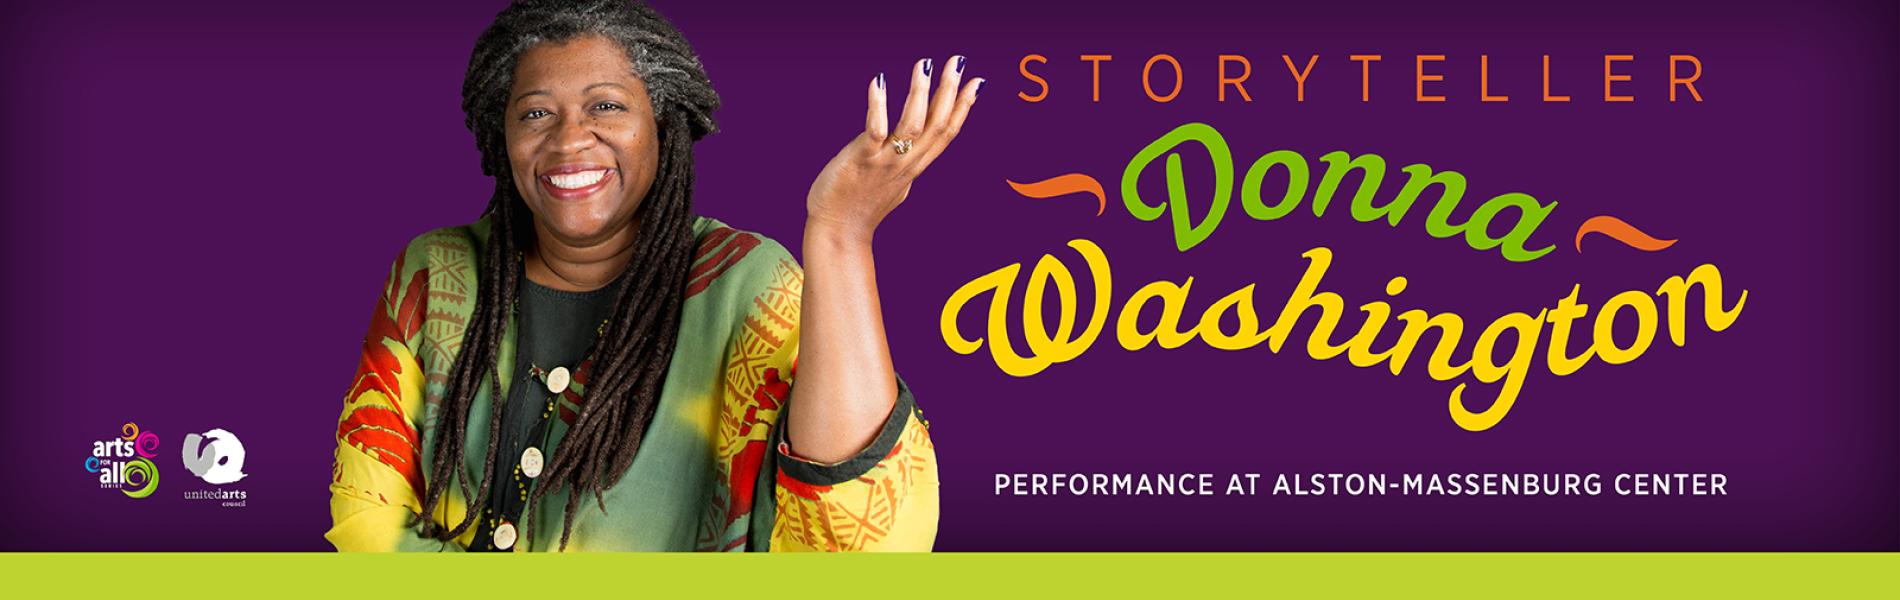 Storyteller Donna Washington